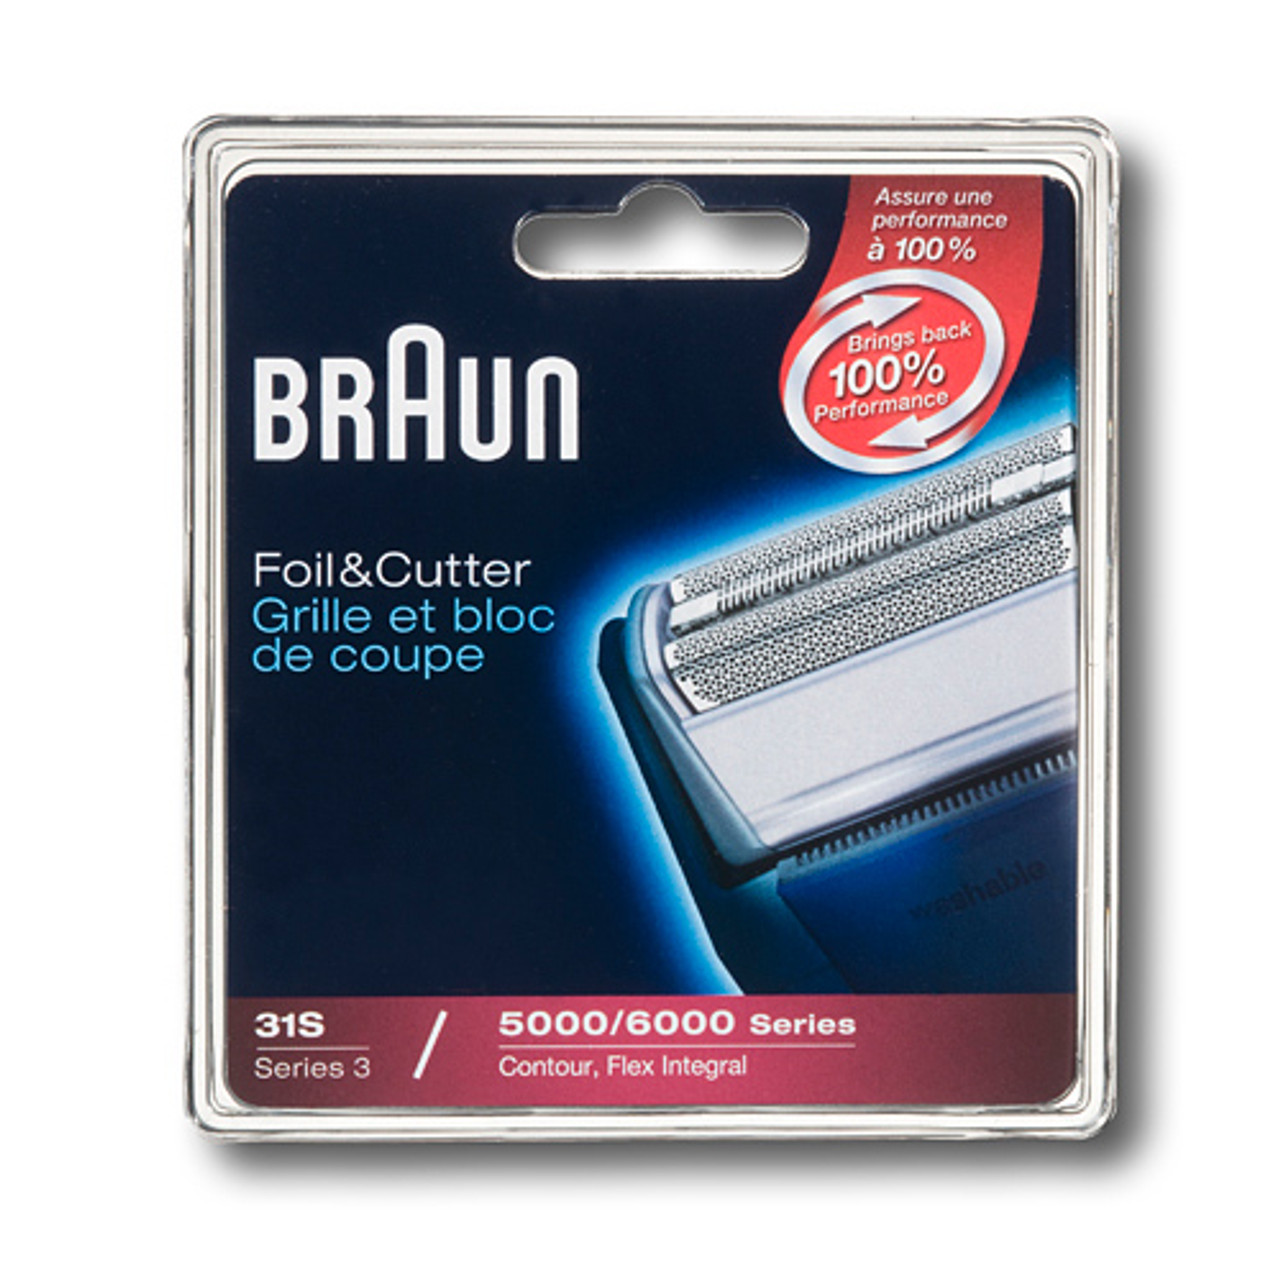 Braun Contour,  Flex integral, Flex XP, Flex XP II, 5790 Razor 6001 (31S) Replacement Foil and Cutter Blade, Silver